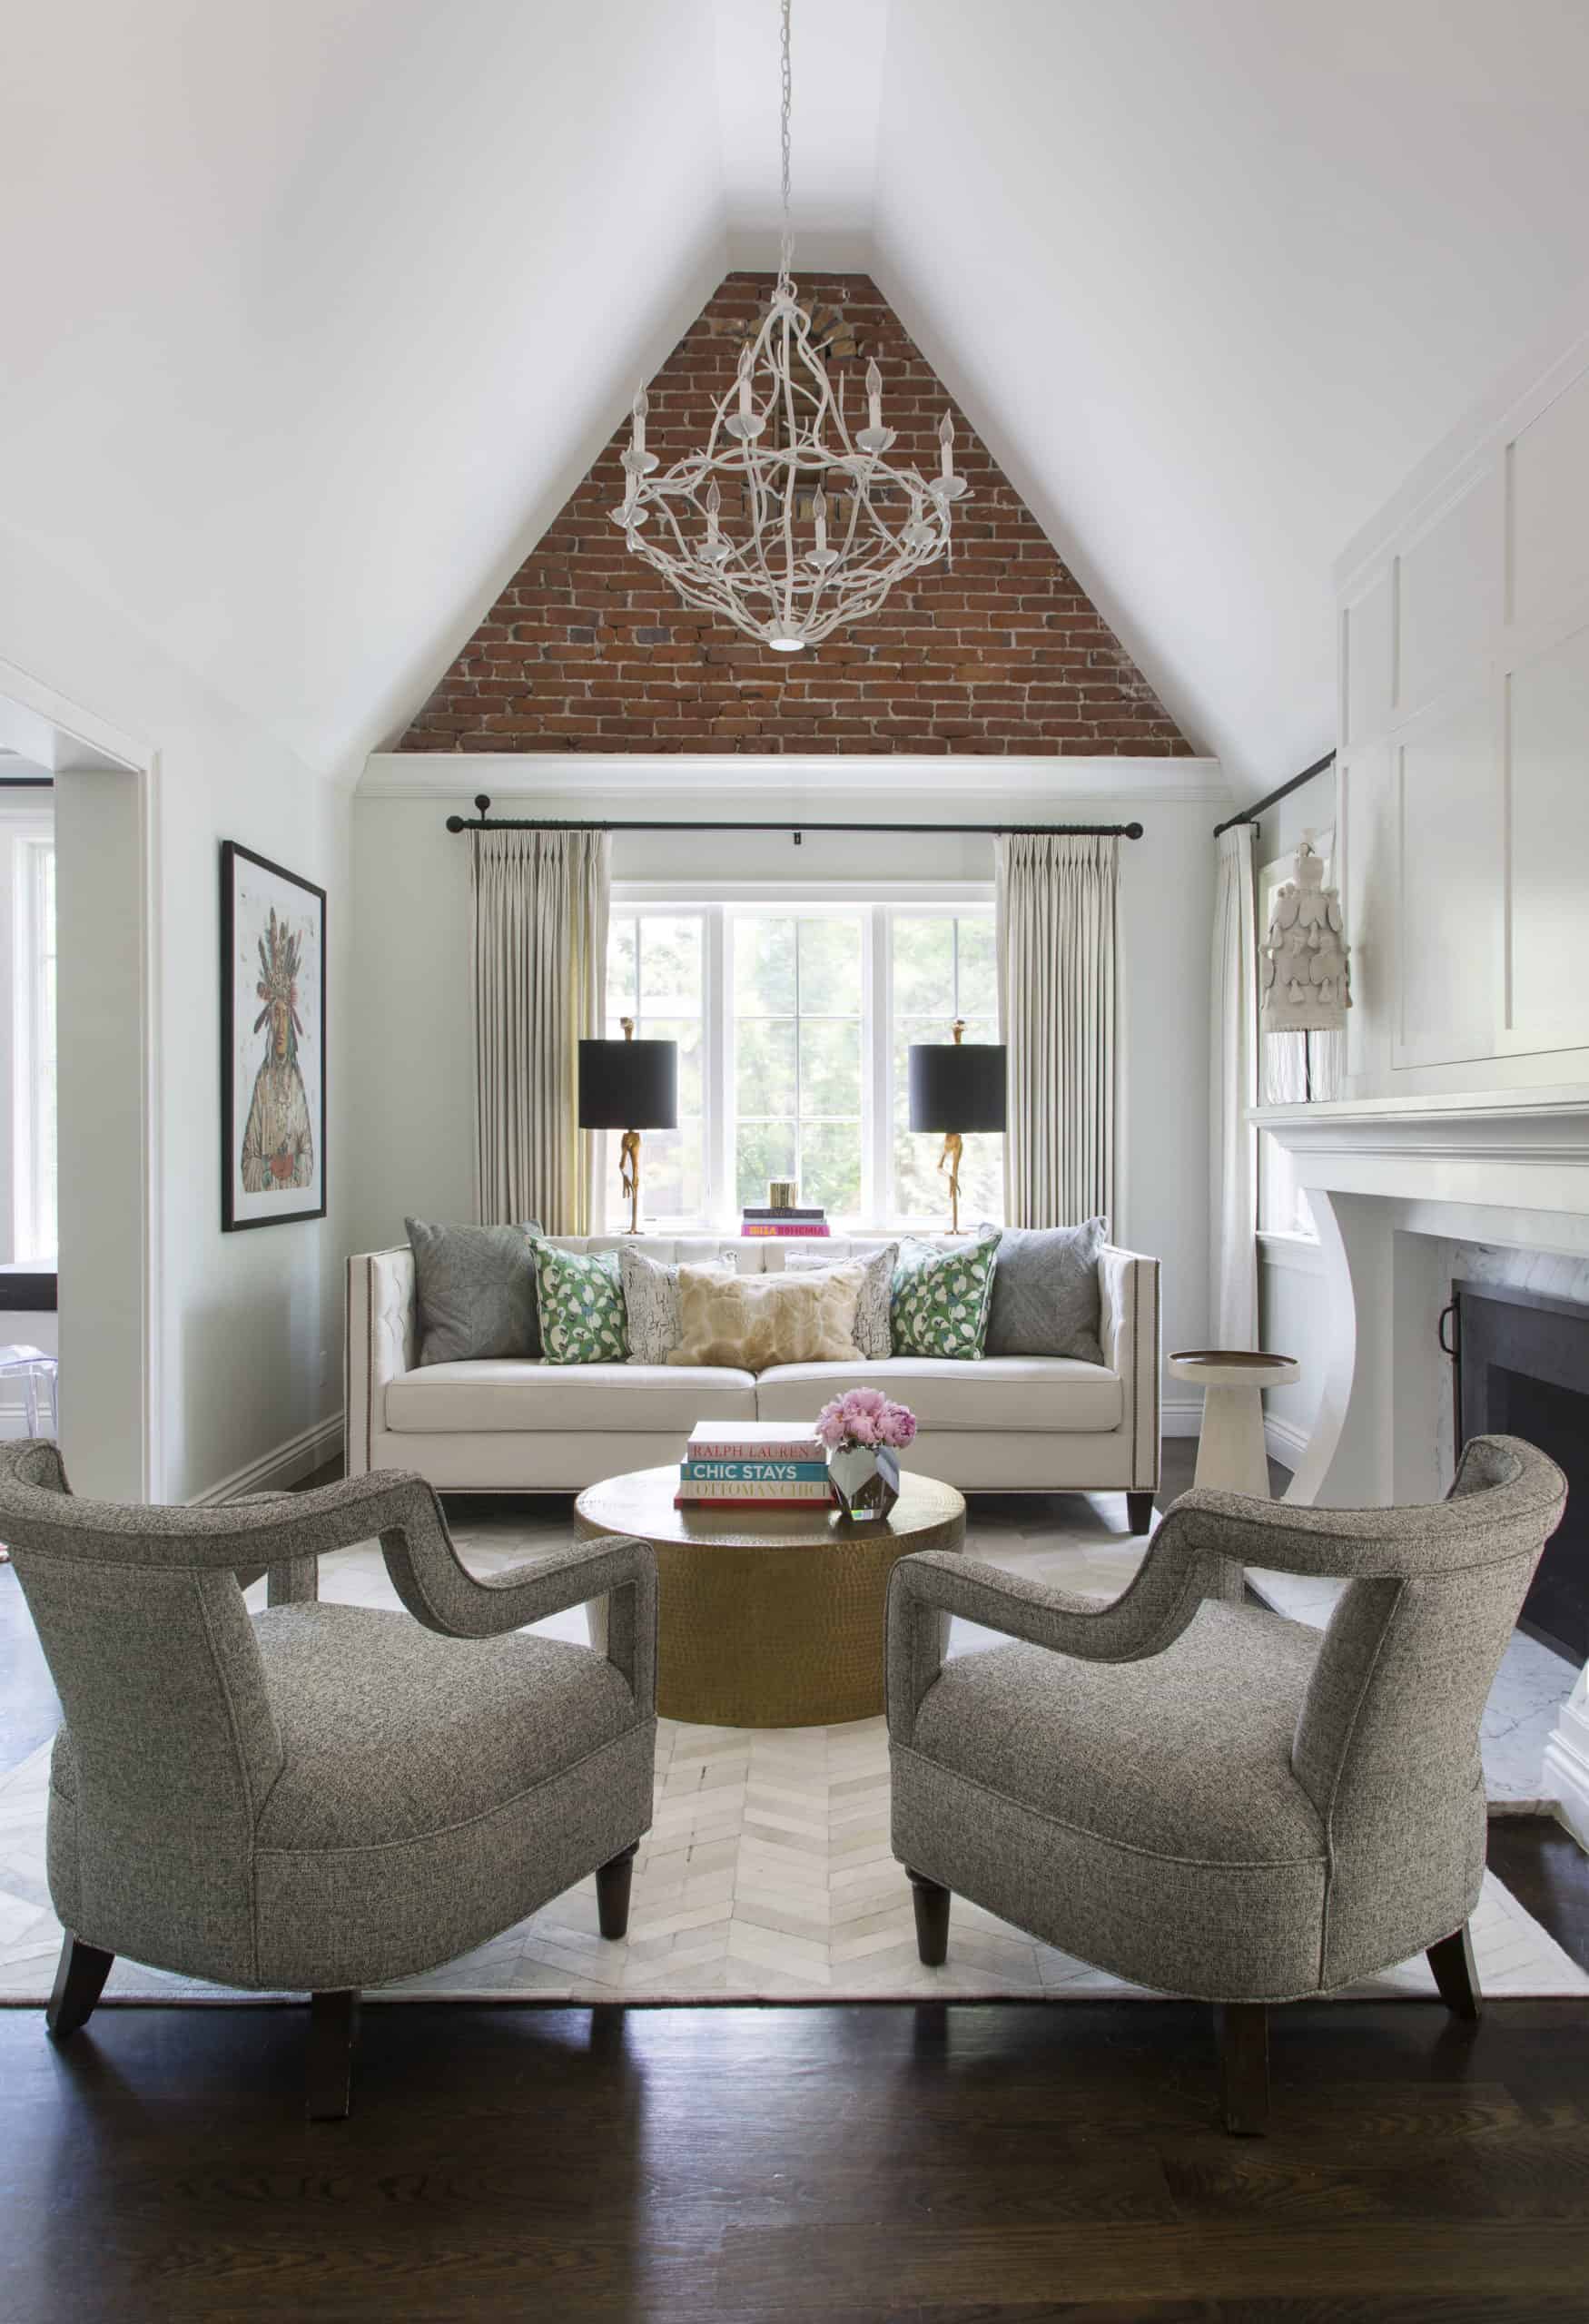 Upscale family room furnishings by interior designer Denver